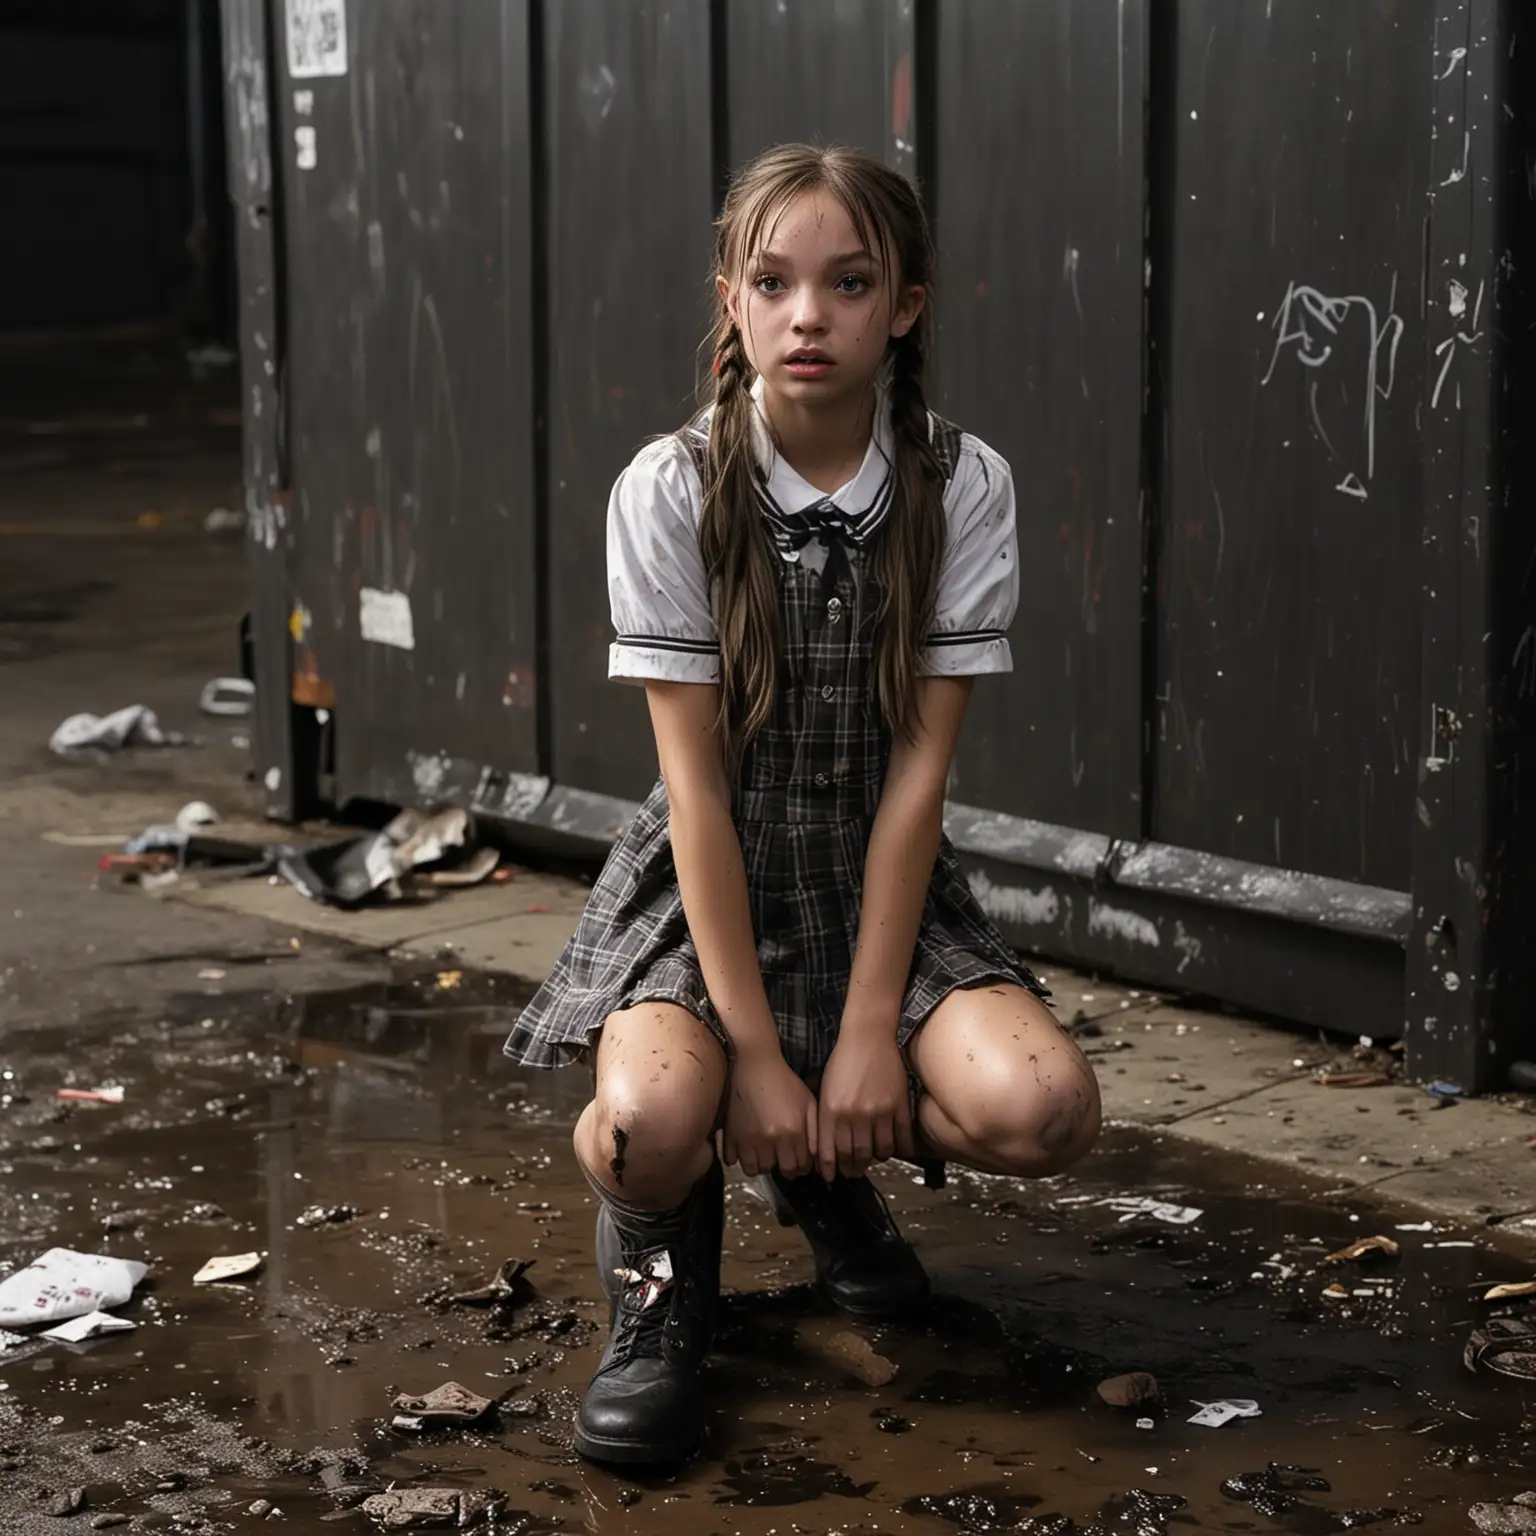 Nighttime Dance Maddie Ziegler as a Schoolgirl by a Dumpster